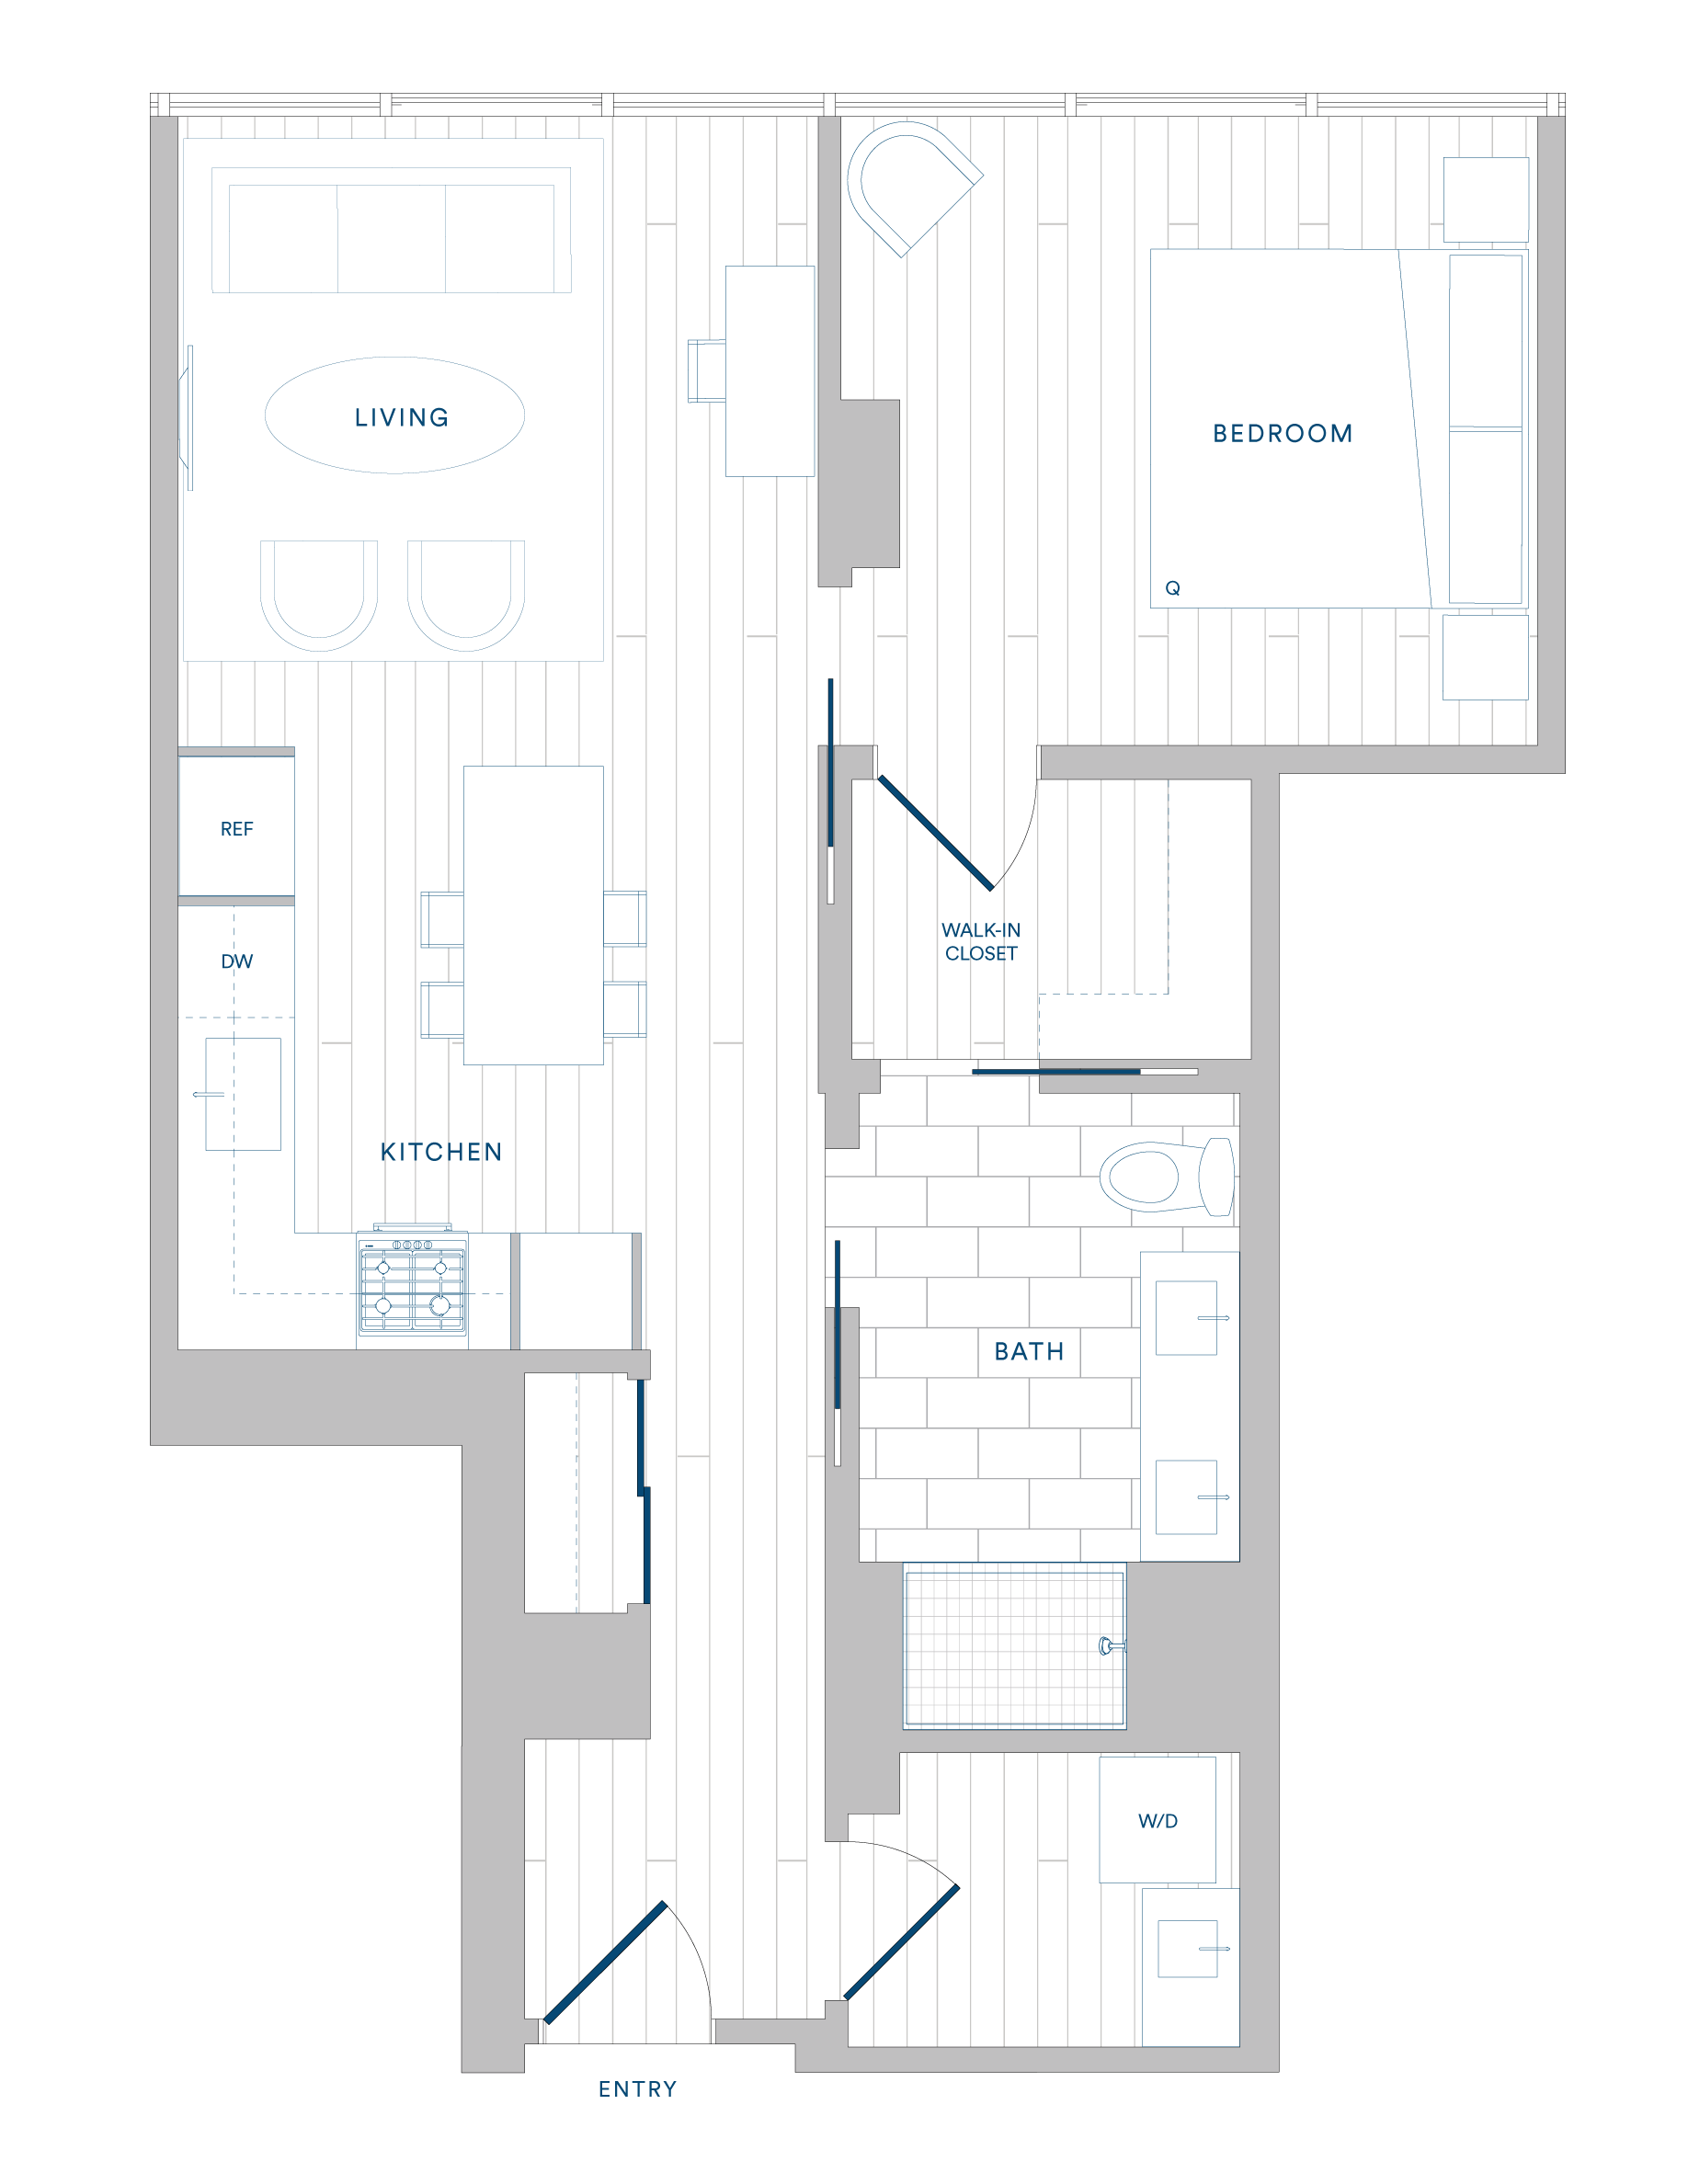 Floorplan for Apartment #418, 1 bedroom unit at Margarite